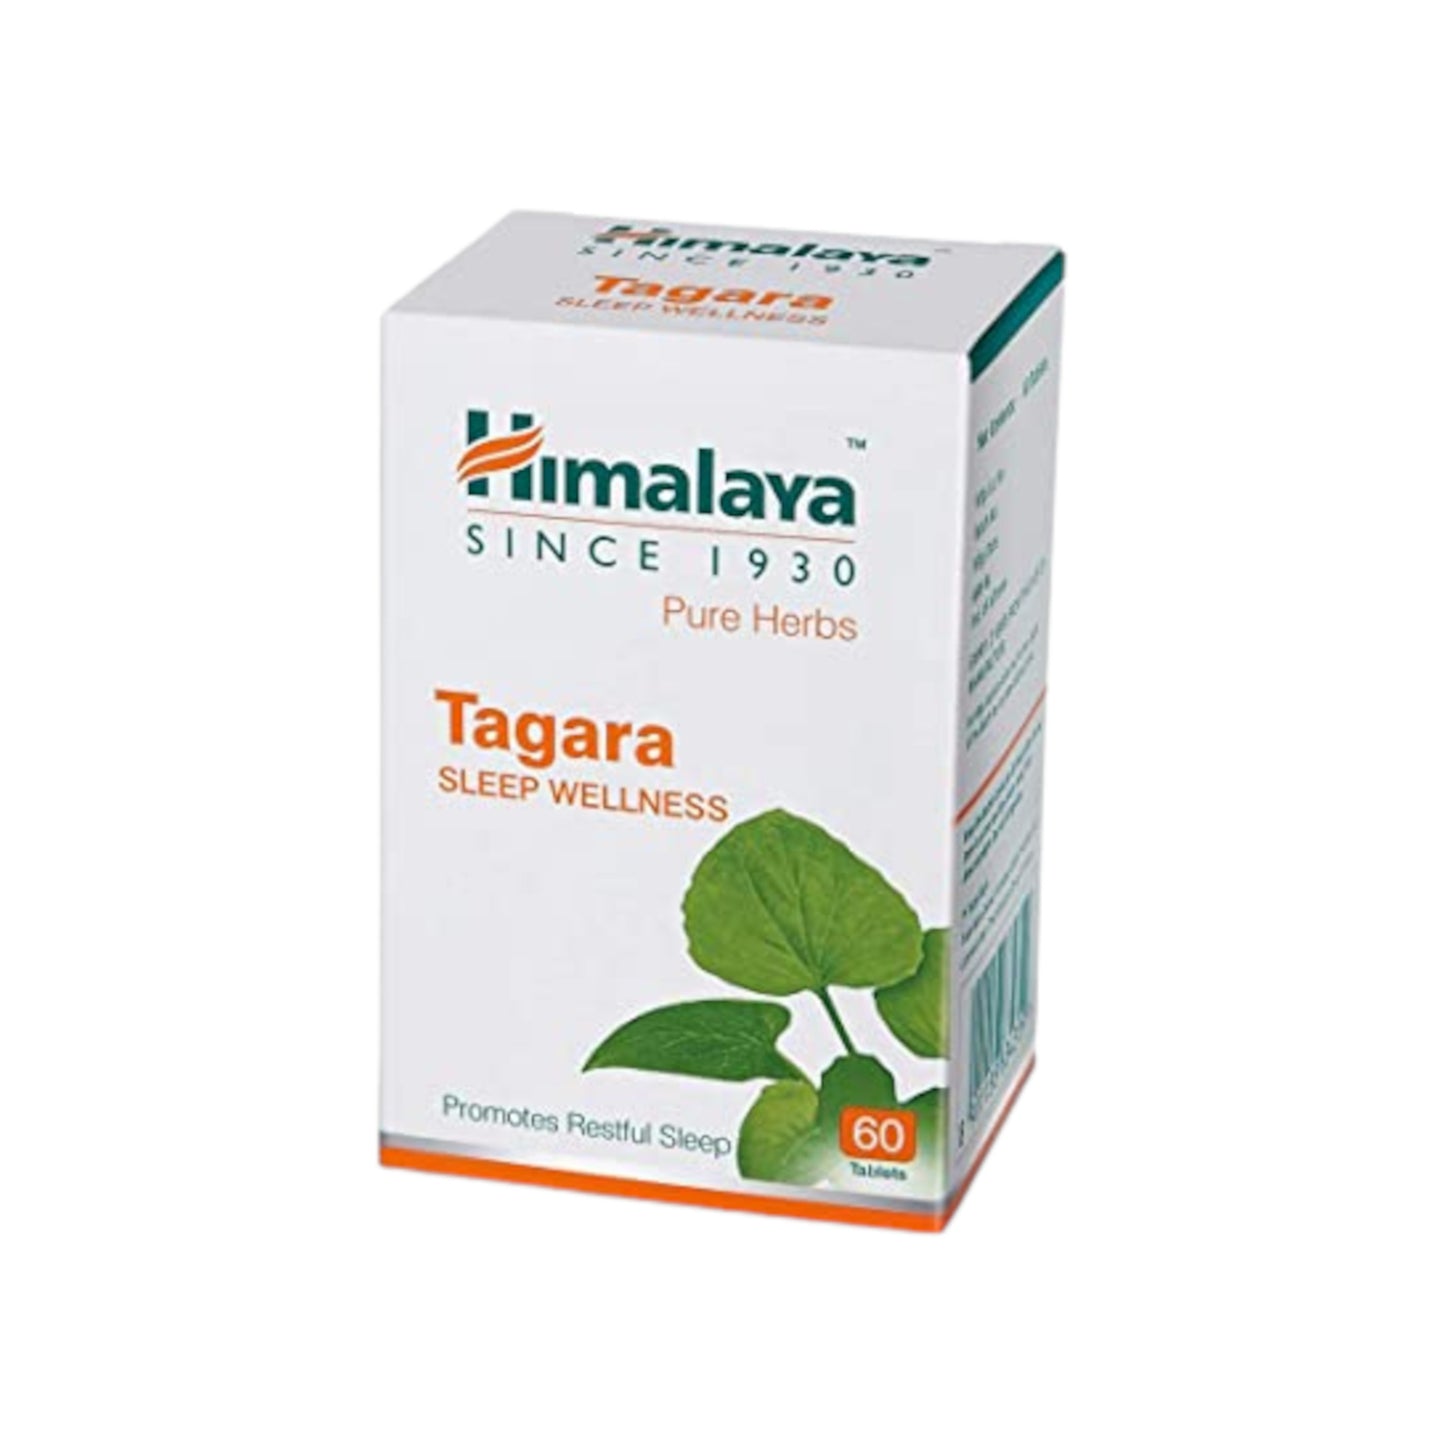 Image: Himalaya Valerian (Tagara) 60 Tablets - Promotes healthy sleep, reduces anxiety and stress.